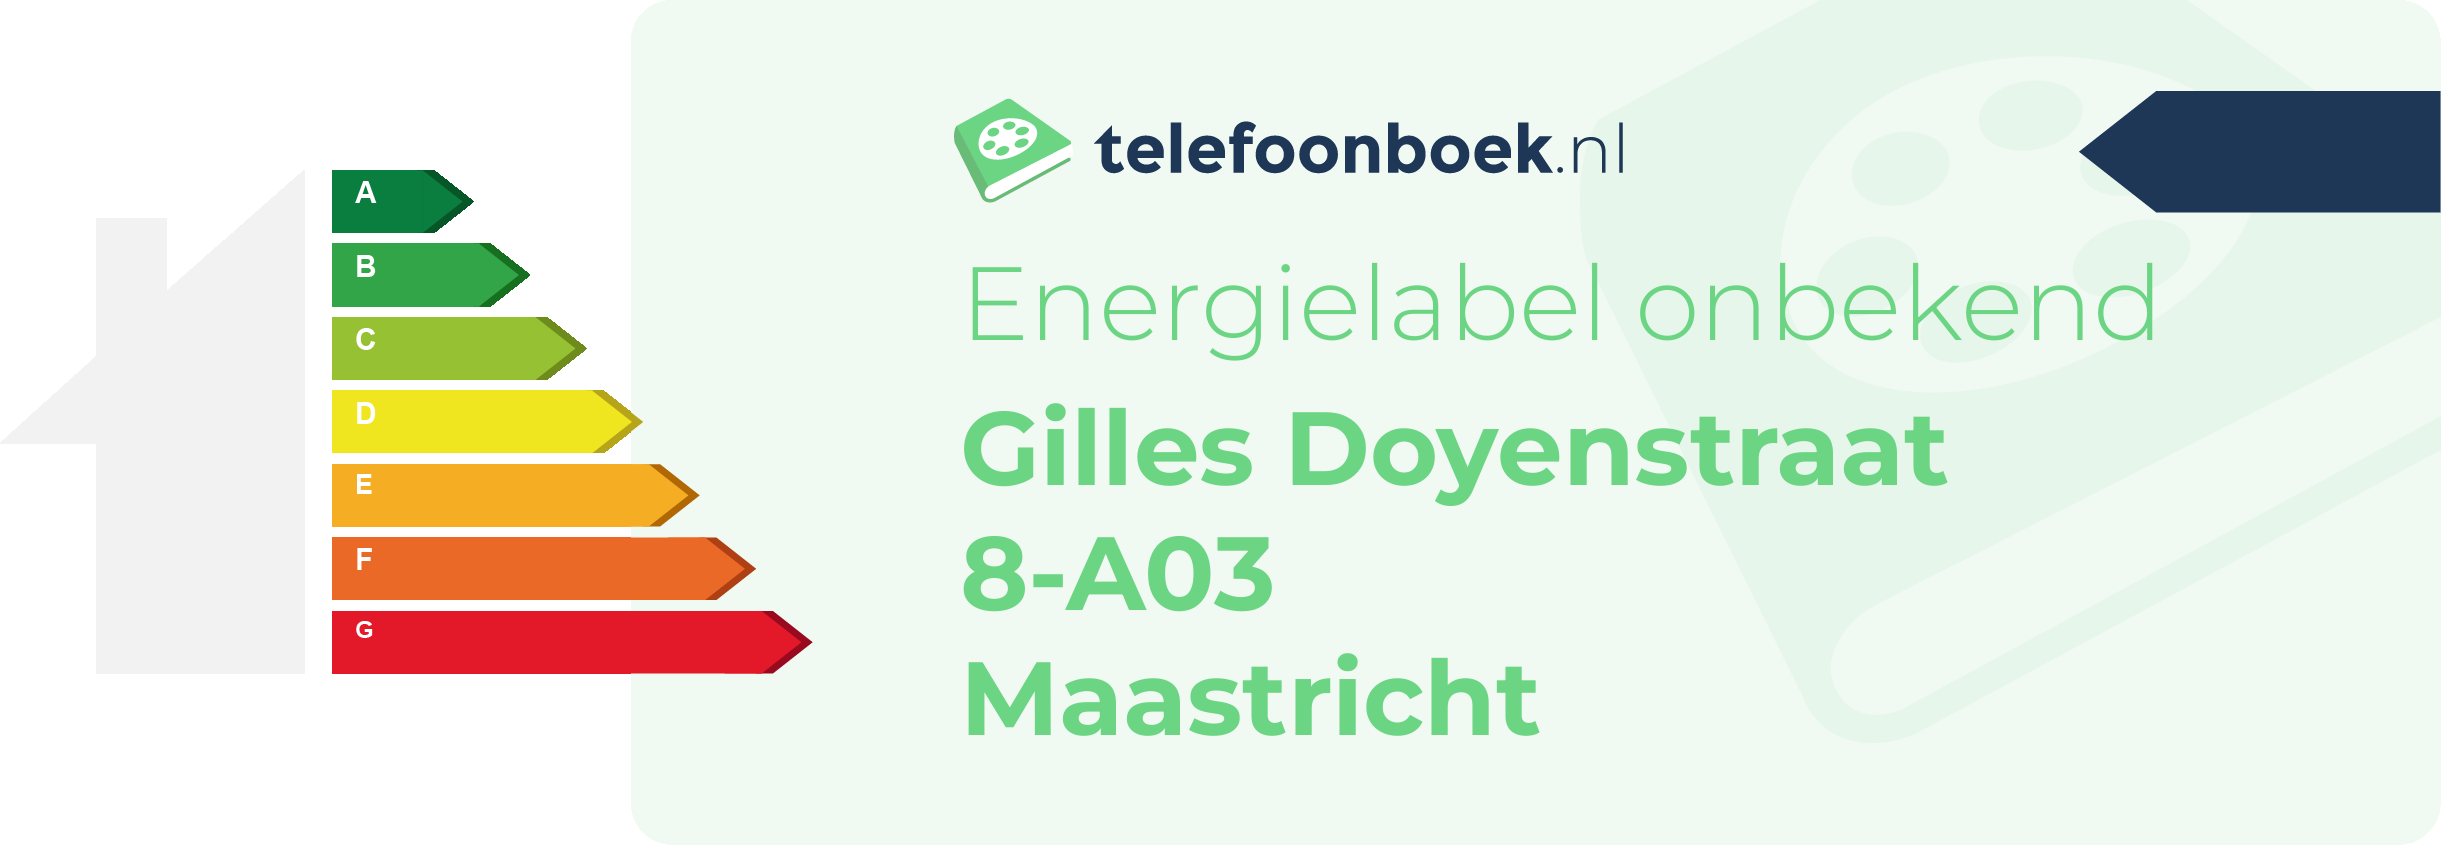 Energielabel Gilles Doyenstraat 8-A03 Maastricht